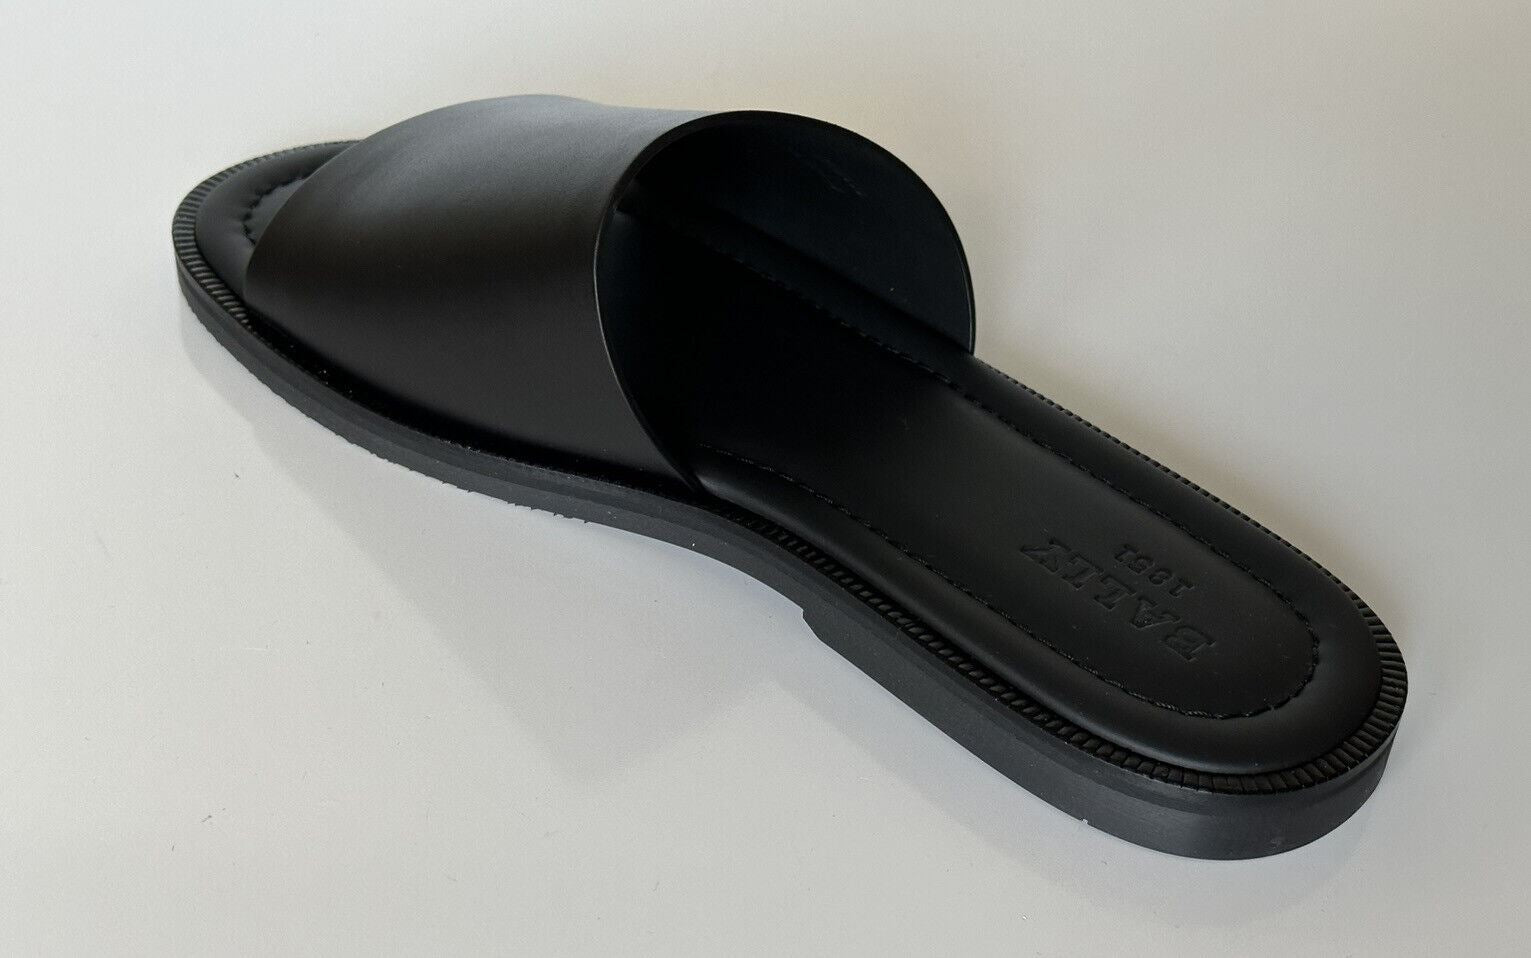 NIB Bally Men's Jaamer Leather Black Slides Sandals 9 US (42 Euro) 6238058 Italy